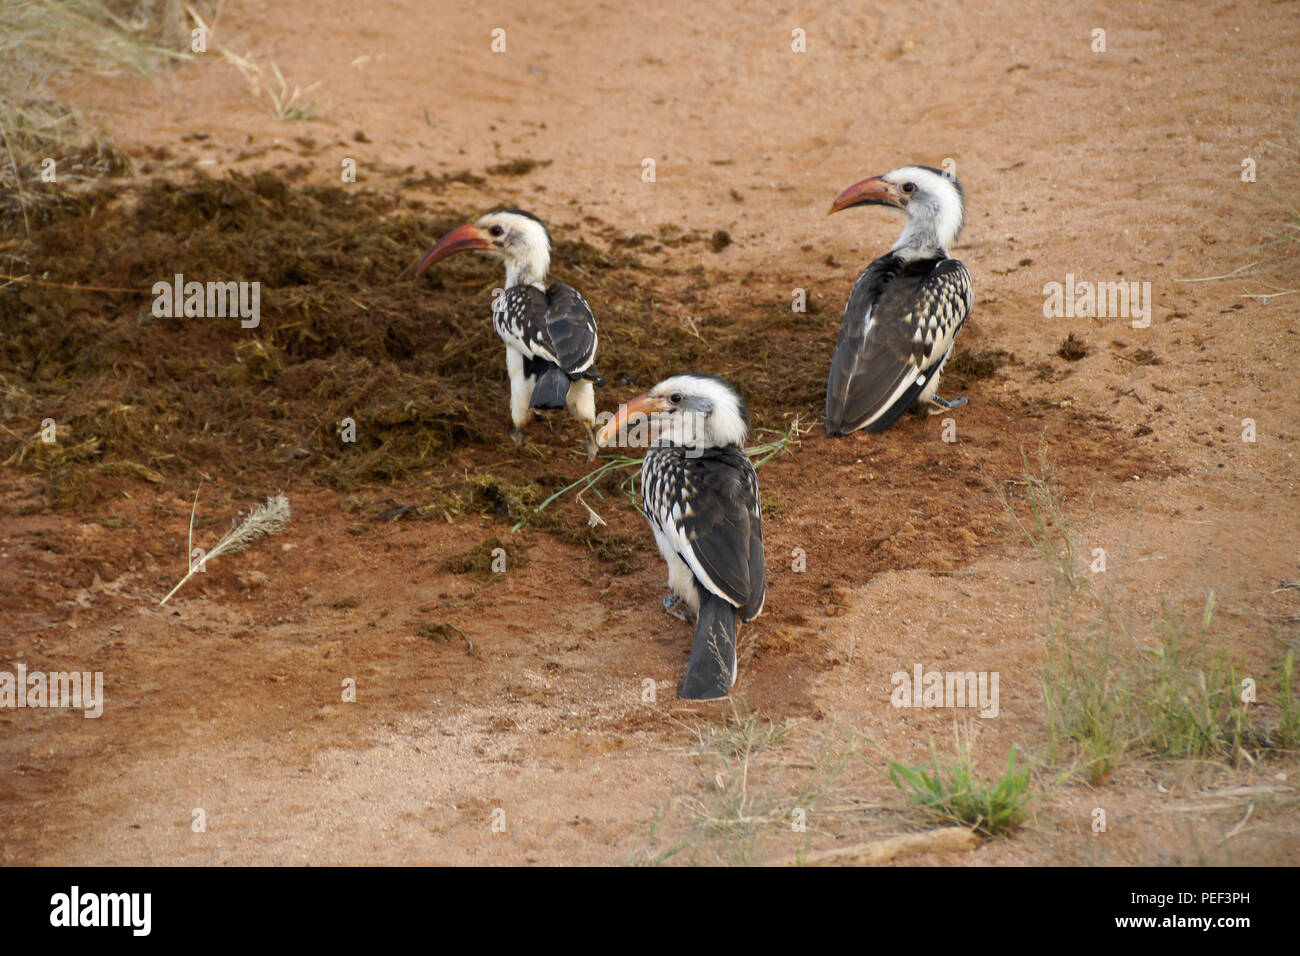 Red-billed hornbills searching for food in elephant dung, Samburu Game Reserve, Kenya Stock Photo